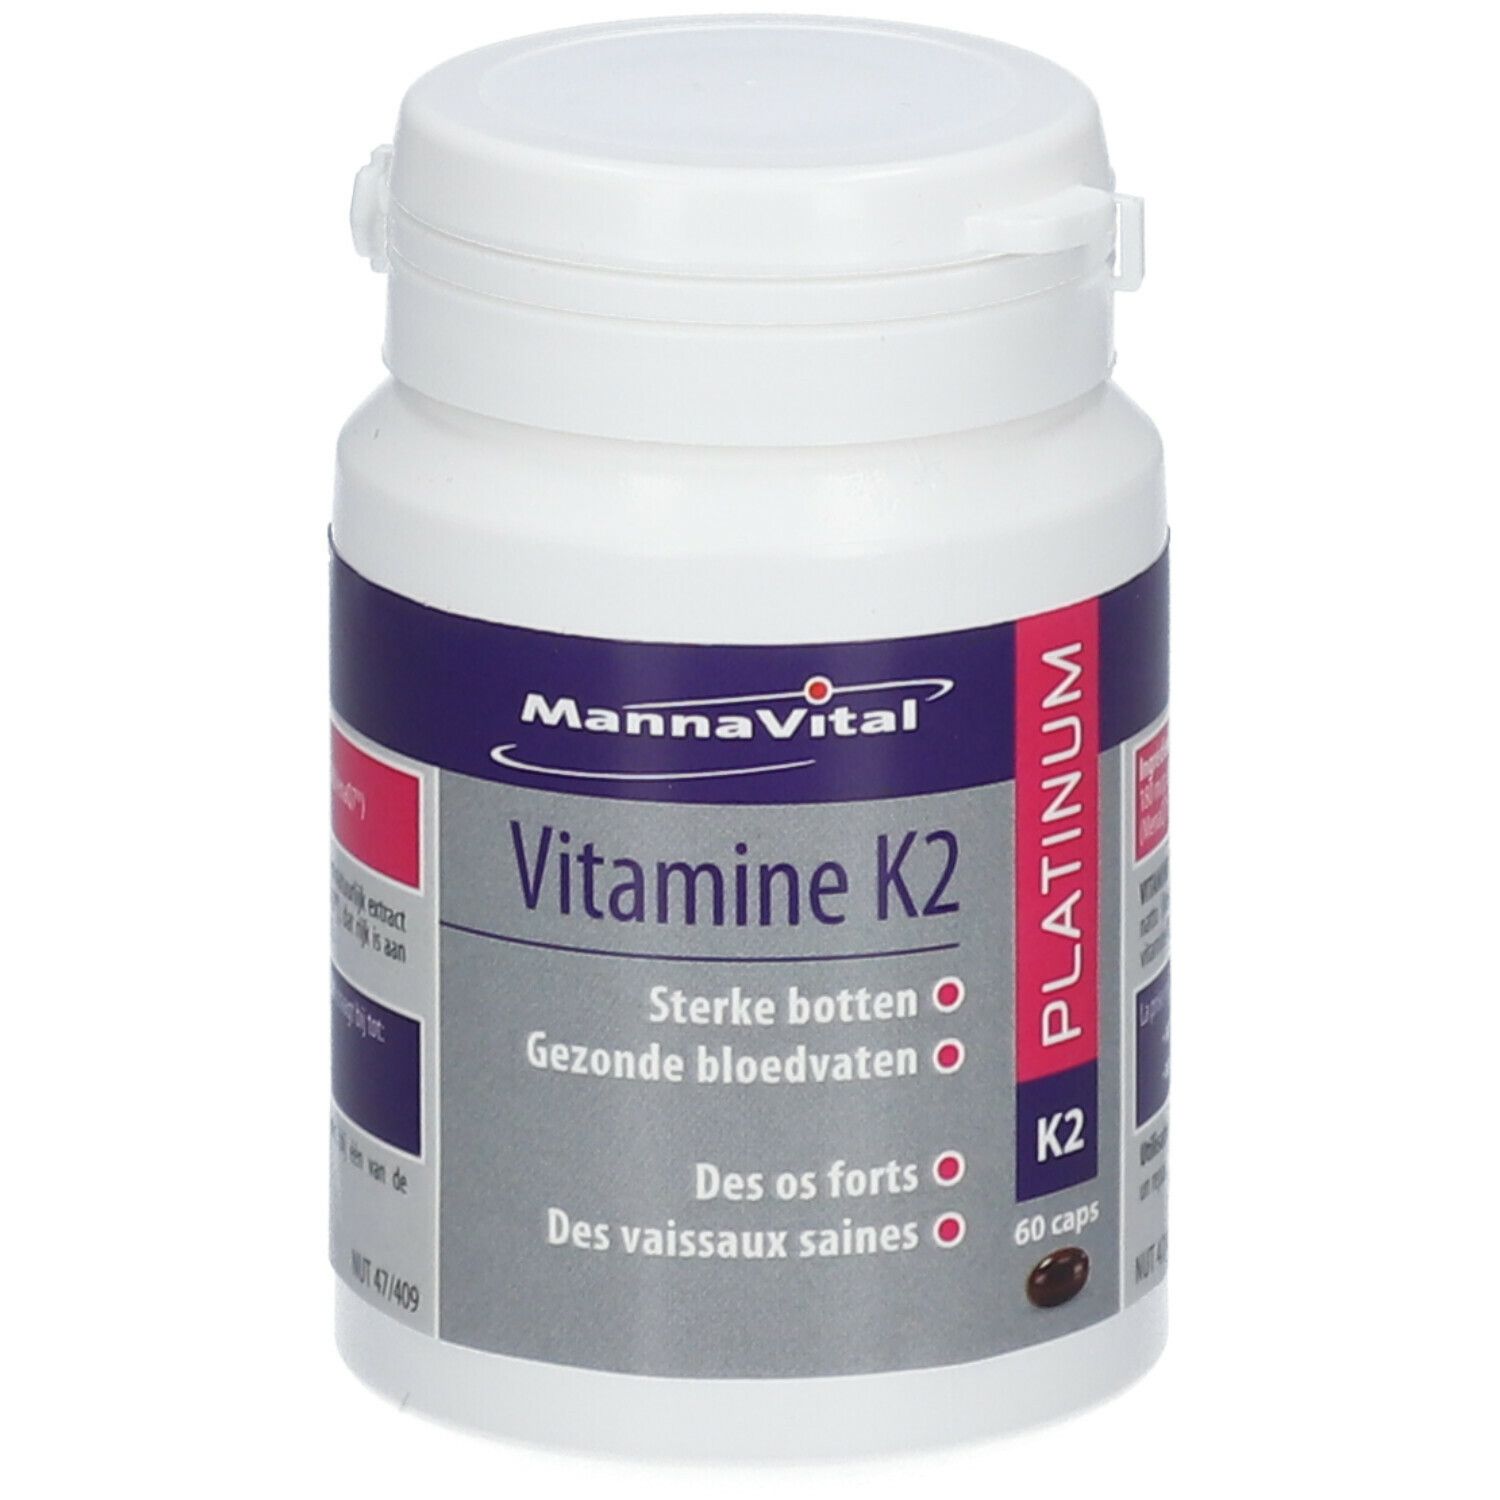 MannaVital Vitamine K2 Platinum